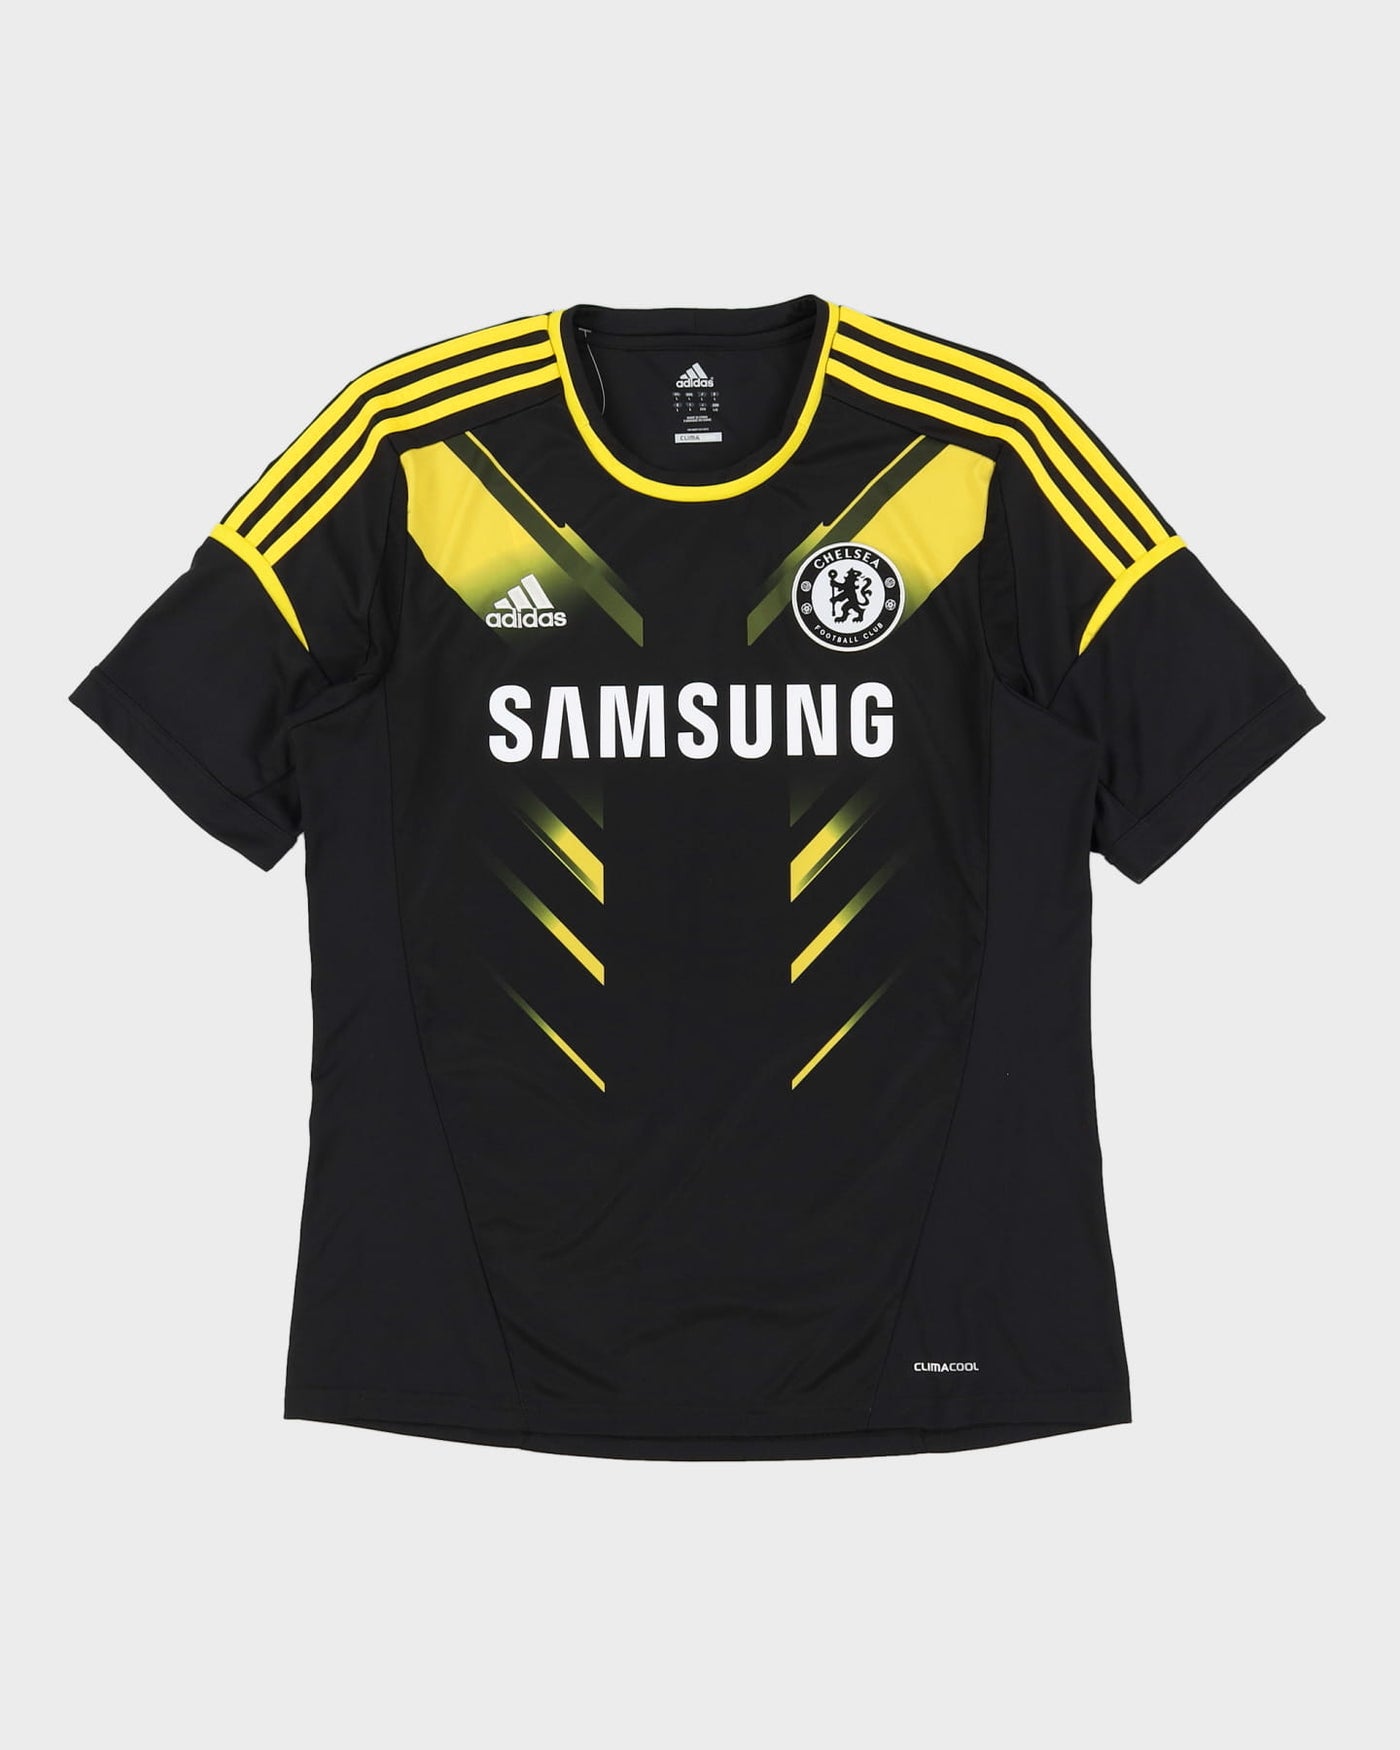 Chelsea 2012-13 Adidas Black Third Kit / Football Shirt / Jersey - L